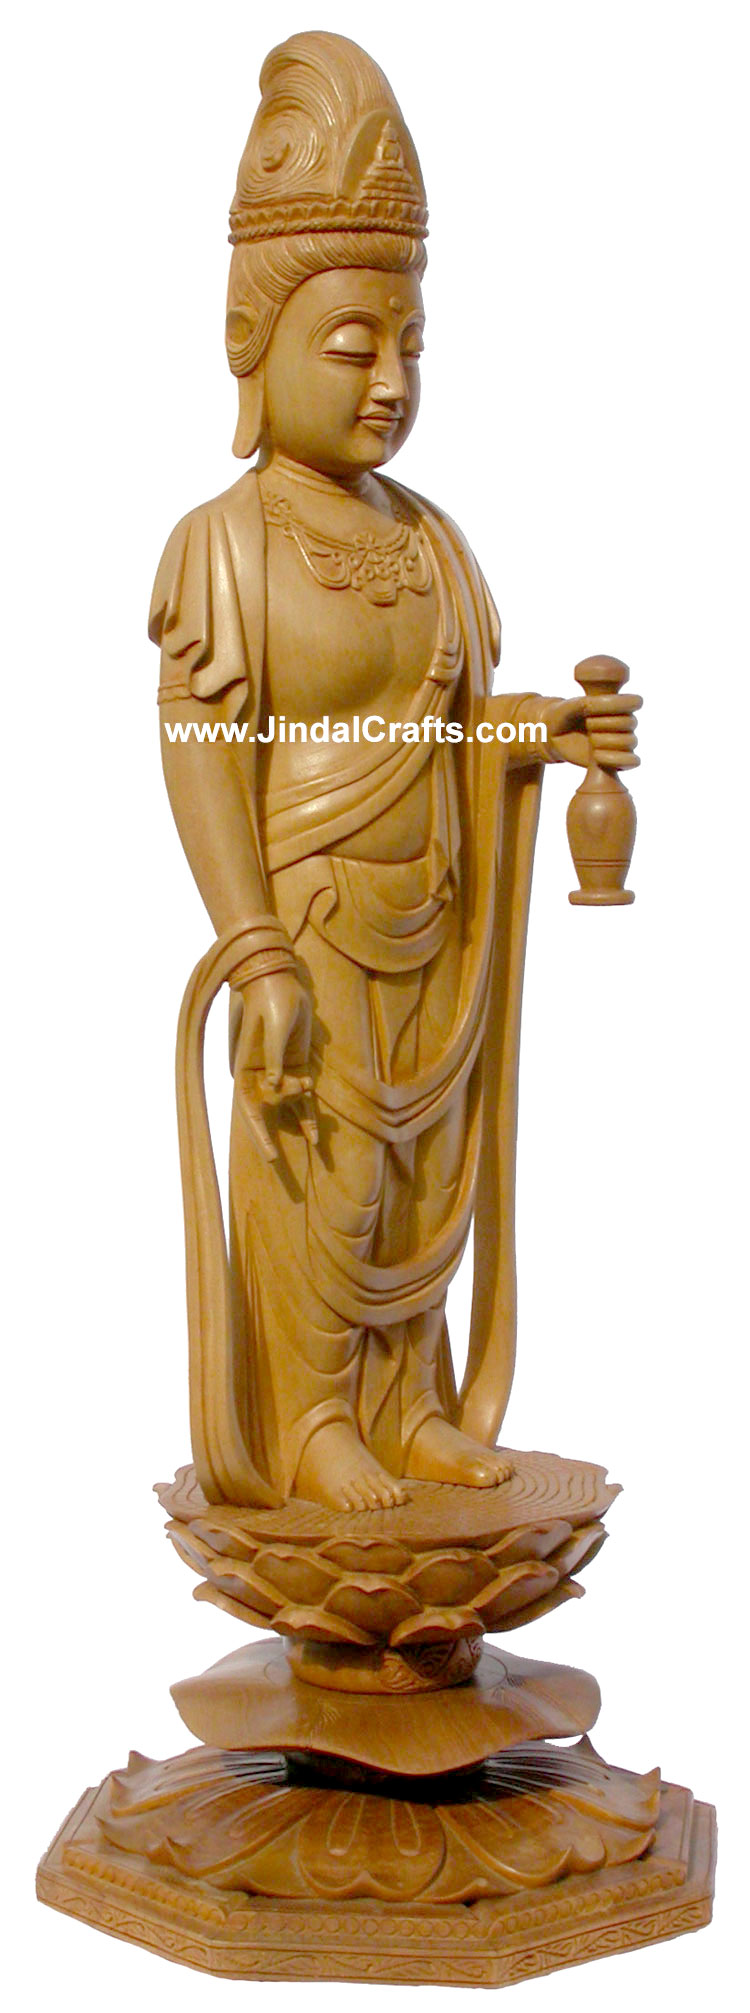 Handmade Wood Sculpture Buddha on Flower Lotus Indian